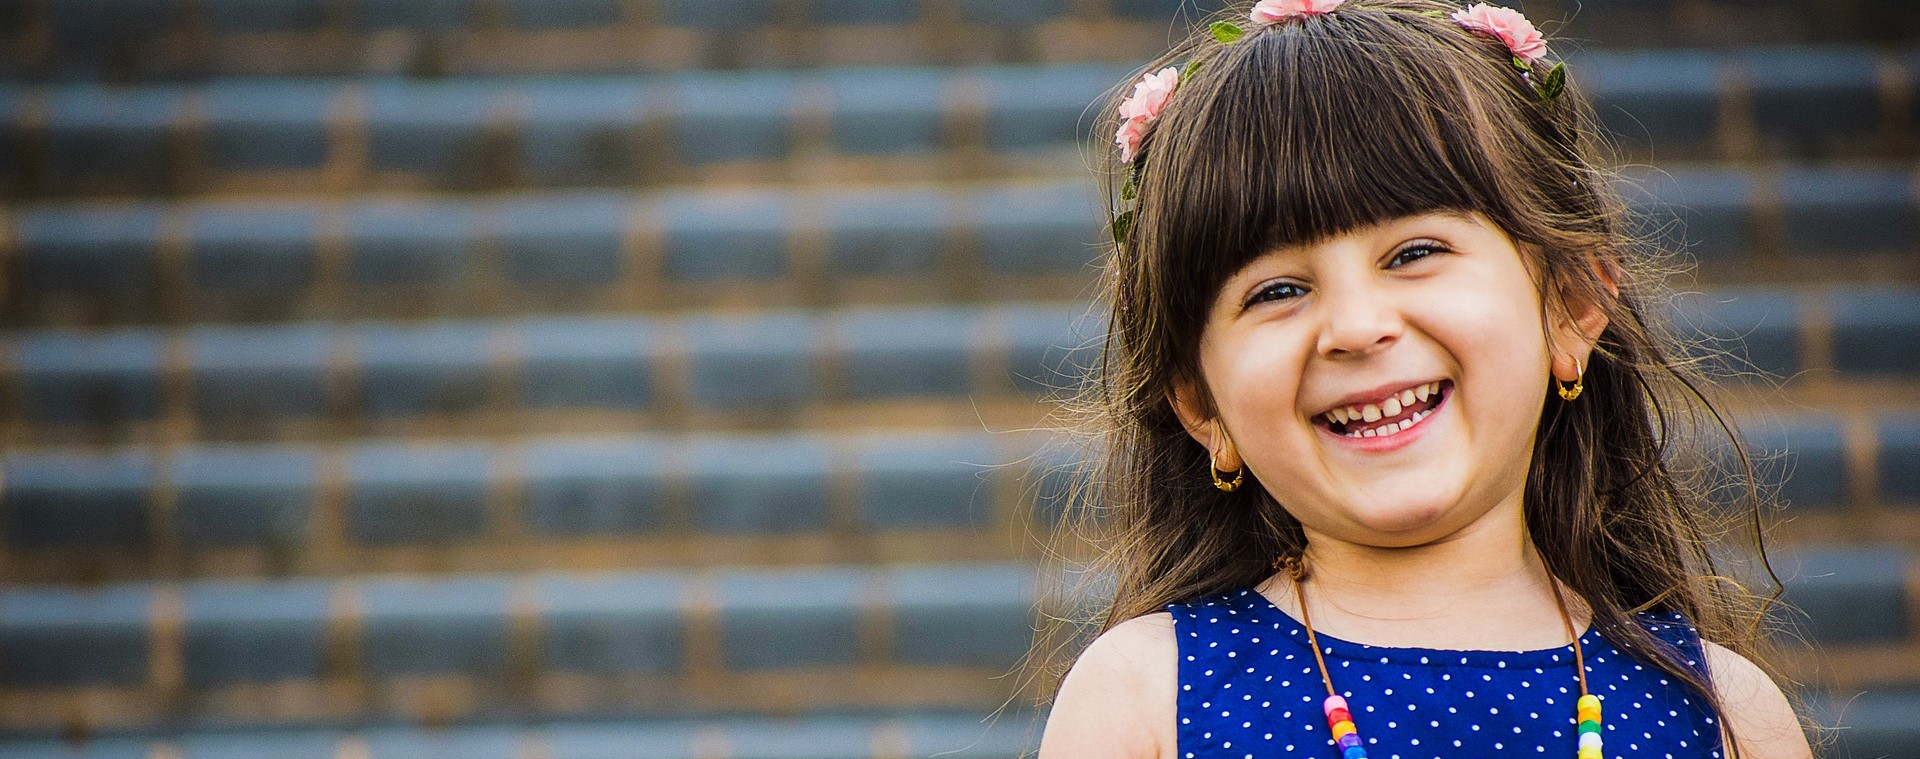 Happy Little Girl in Alabama | Kids Car Donations